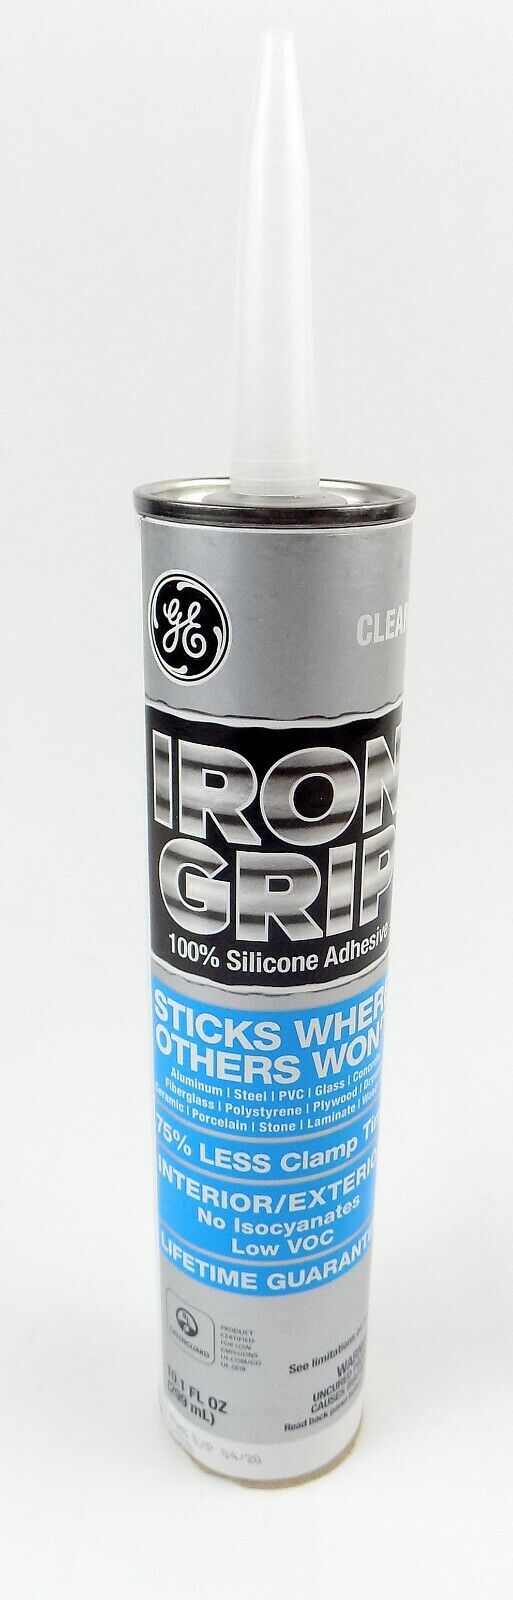 GE Iron Grip M90058 Clear 100% Silicone Adhesive 10.1 Fl Oz.Interior Exterior